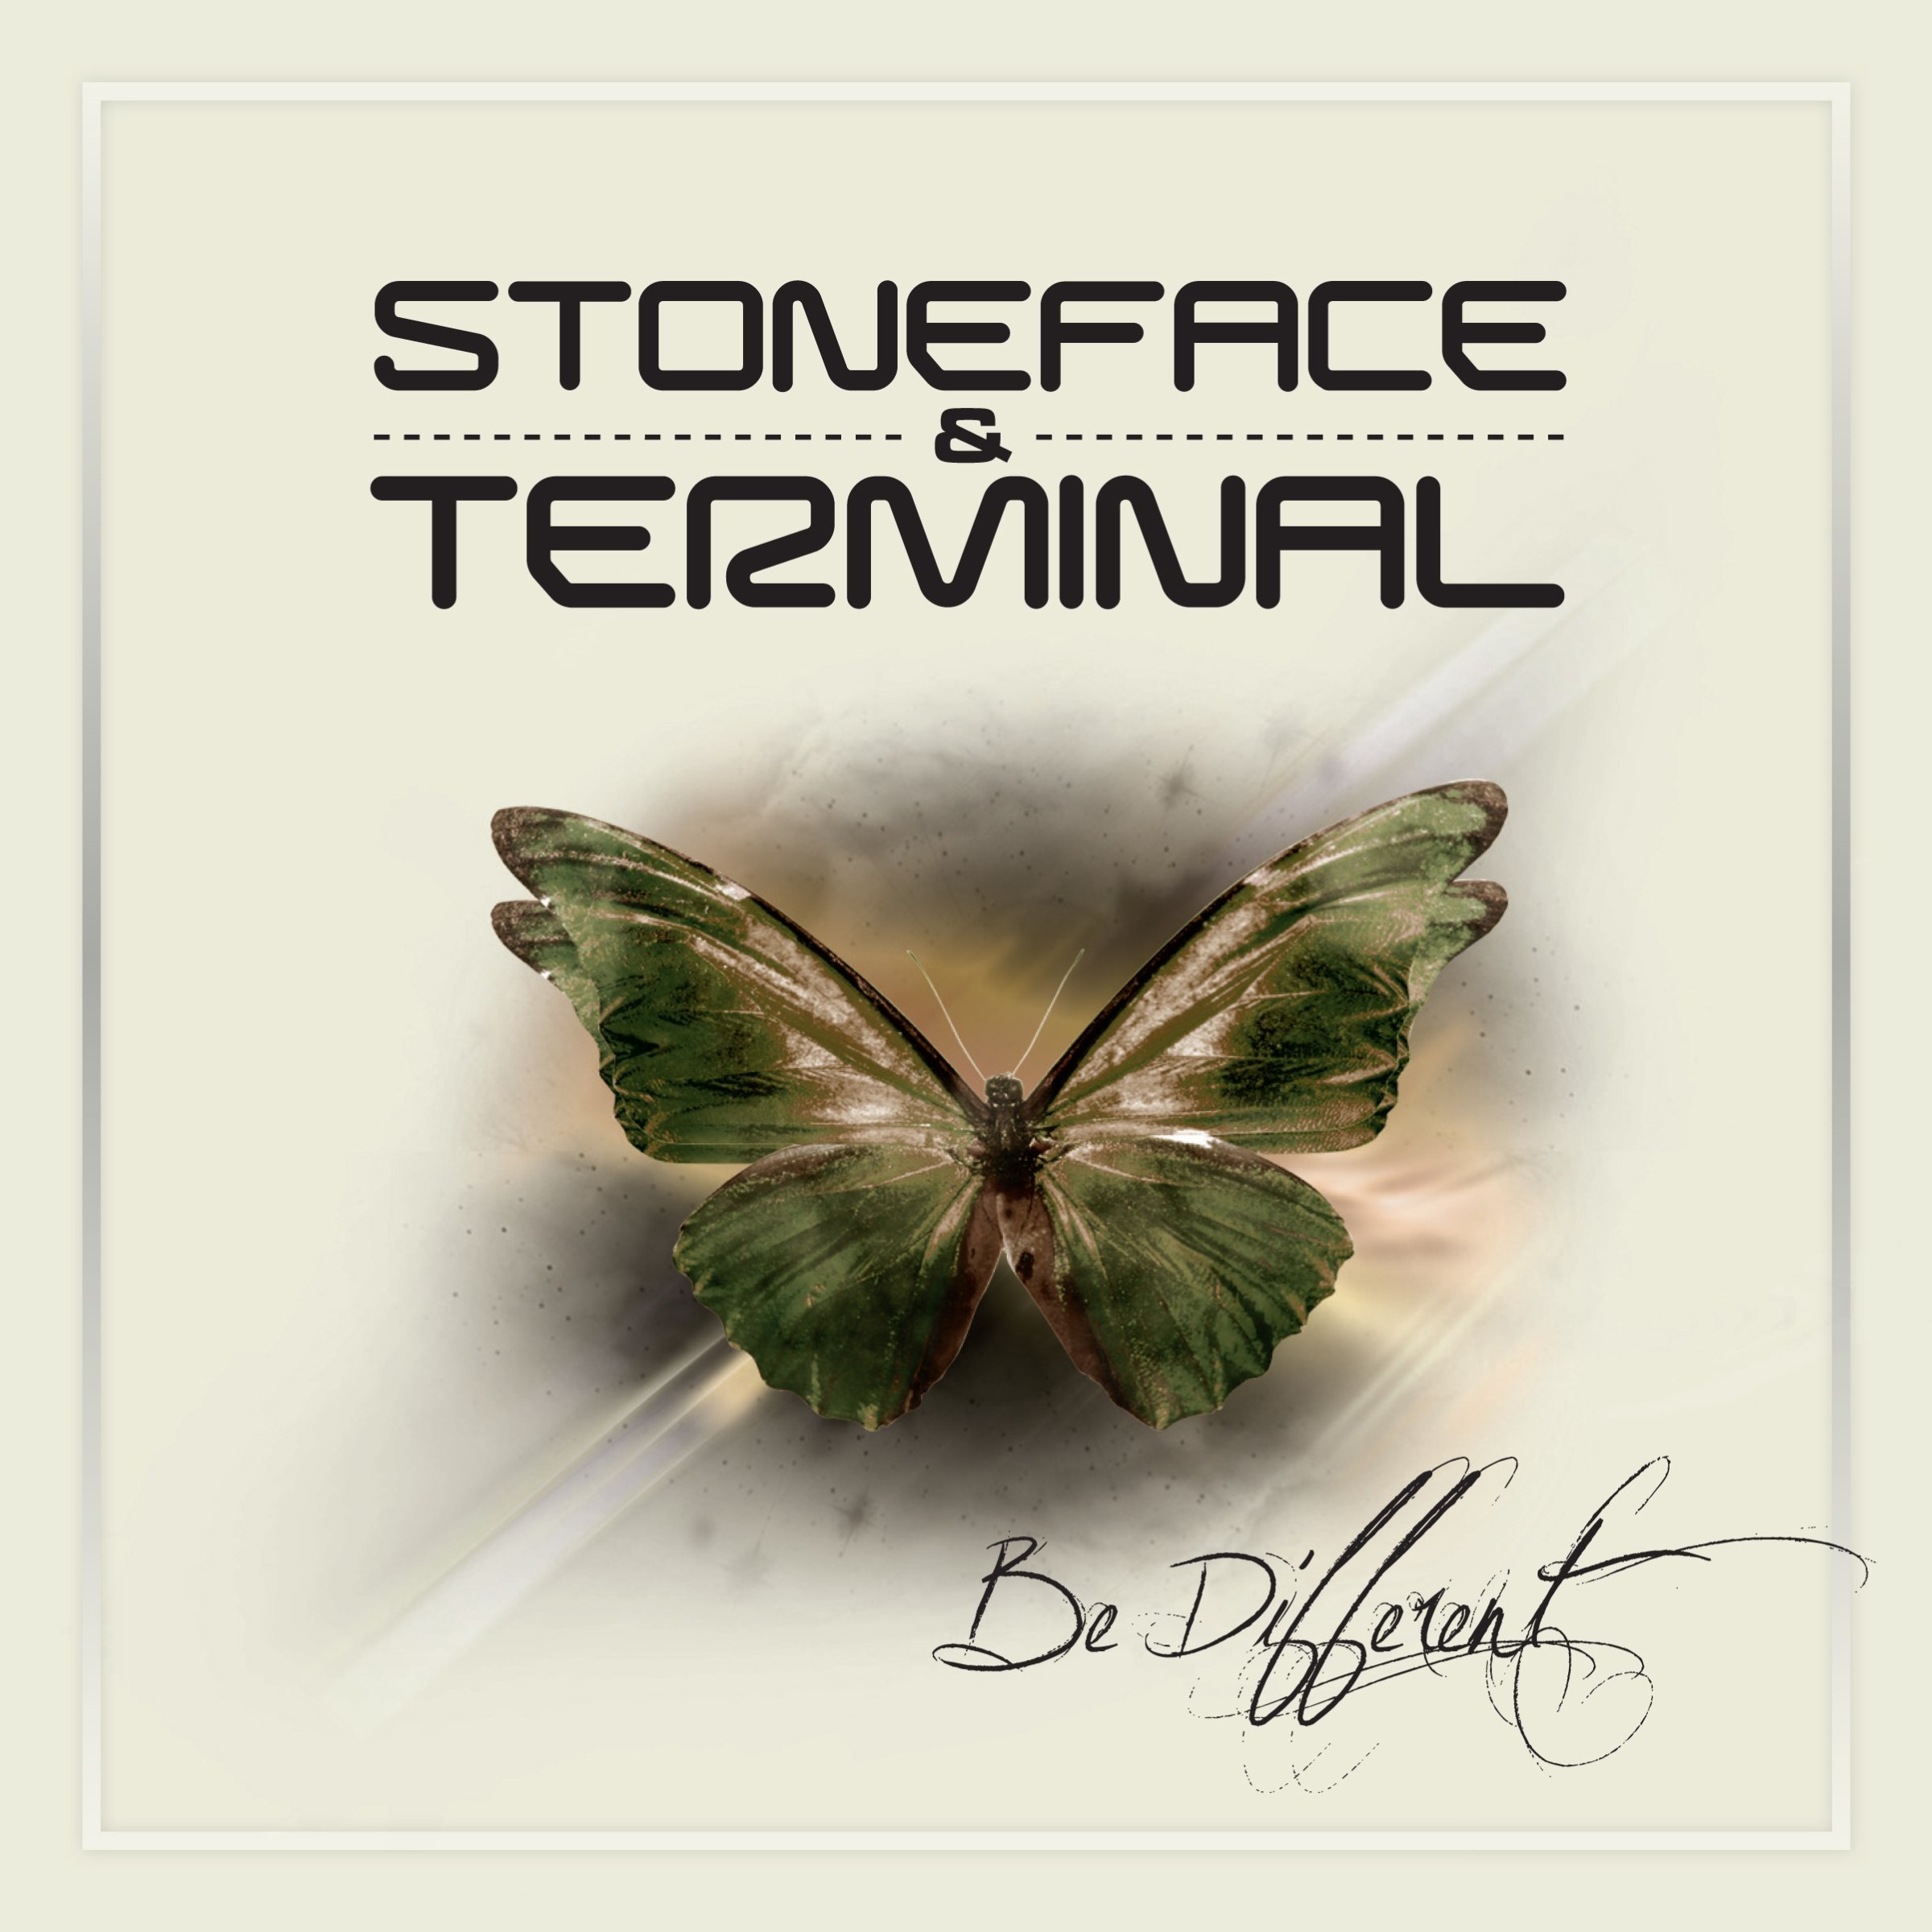 Stoneface terminal. Euphonic. Stoneface & Terminal - Moonscape. One Heart Stoneface & Terminal.